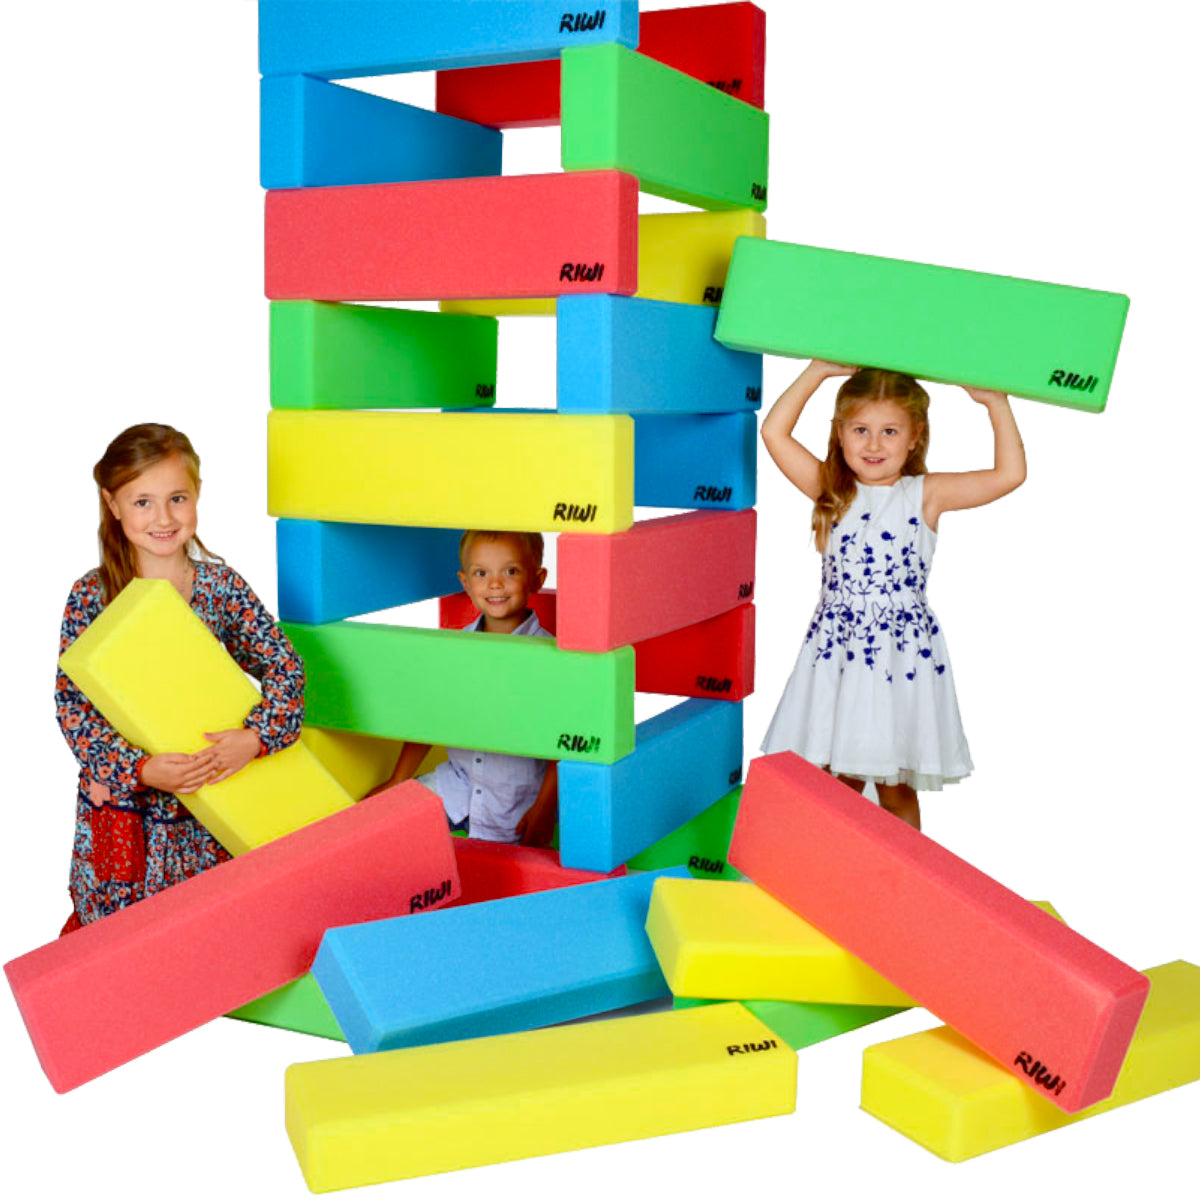 RIWI building blocks big tower soft foam blocks xxl giant bricks for kids creative play